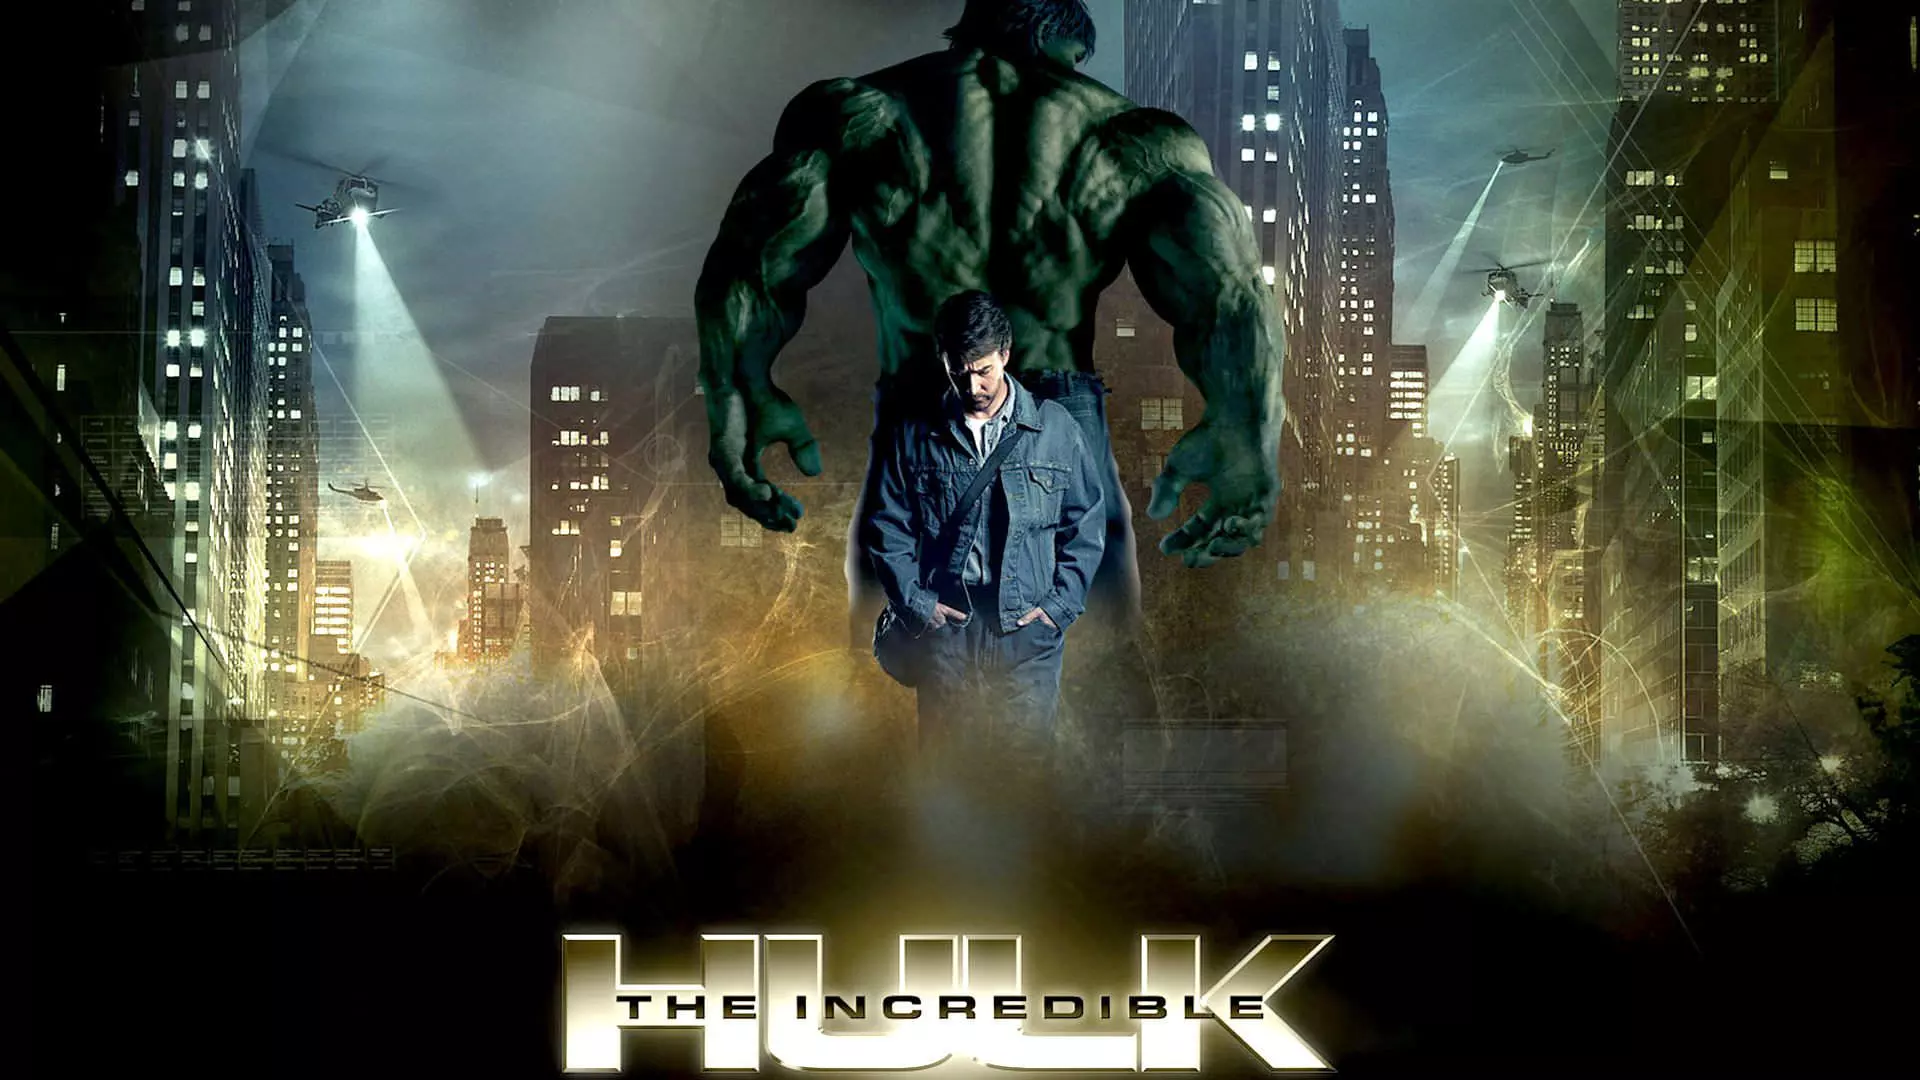 بروس بنر و هالک در پوستر فیلم The Incredible Hulk